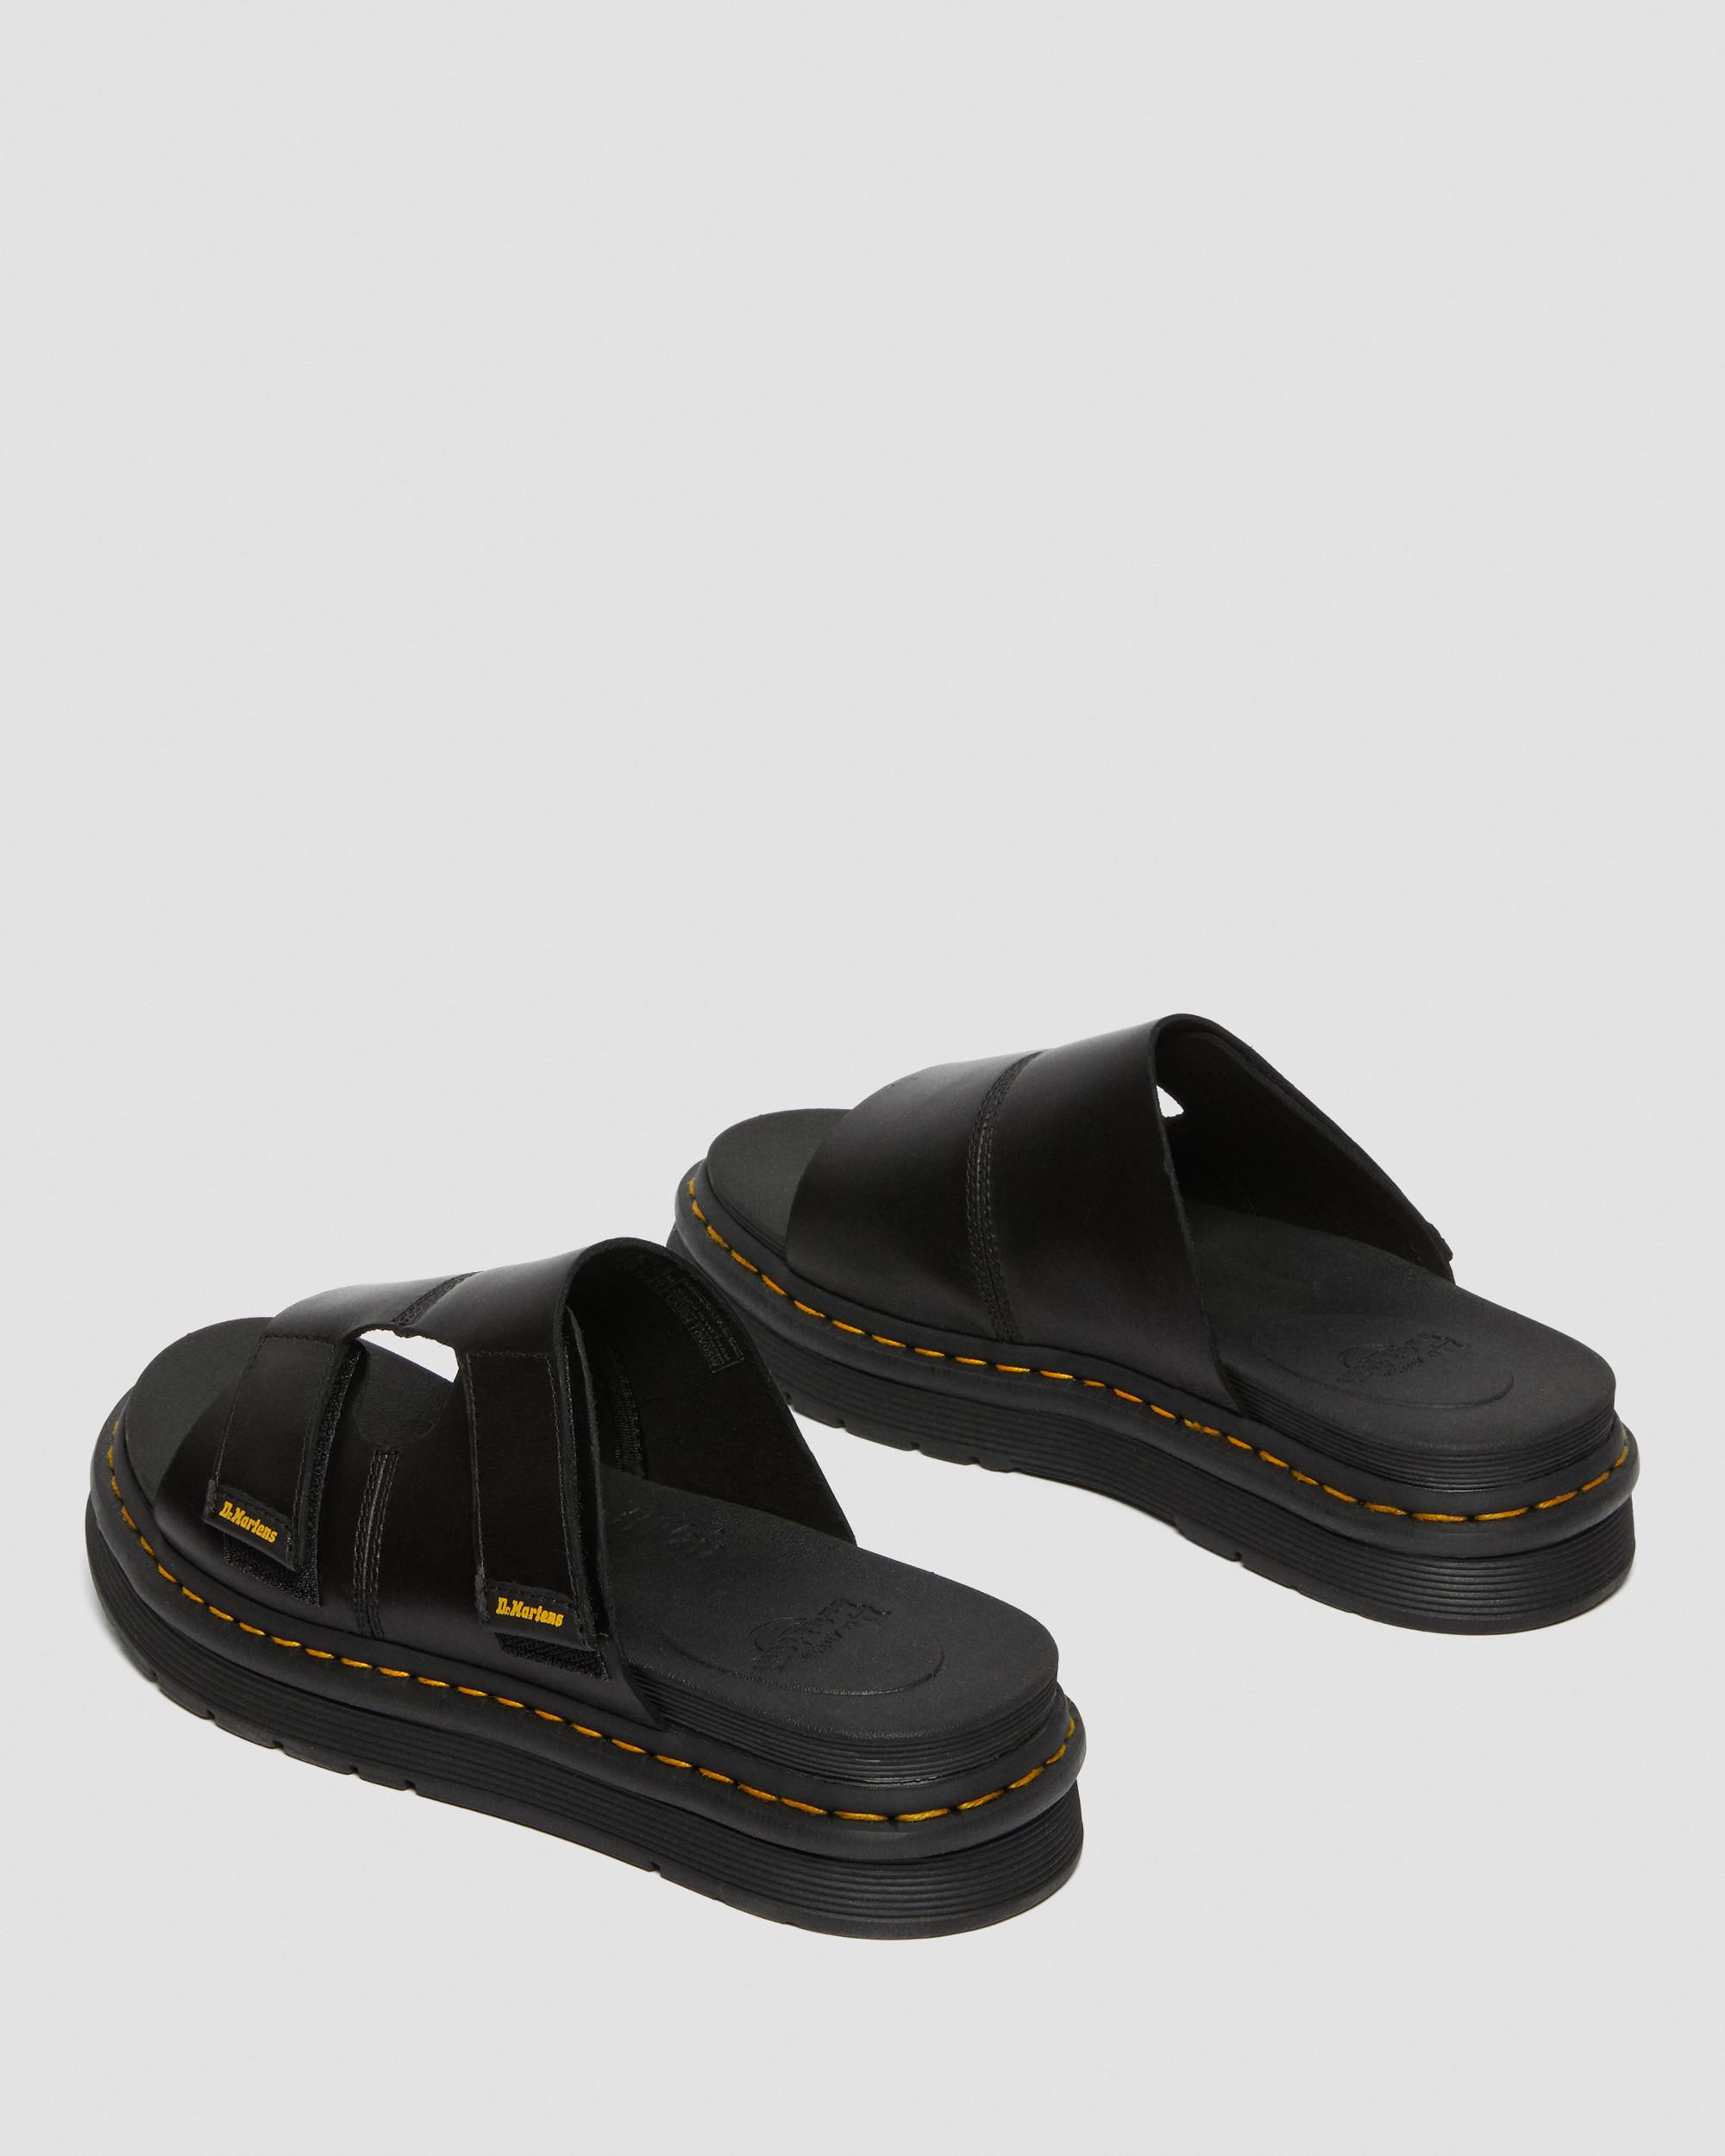 Daxton Leather Slide Sandals in Black